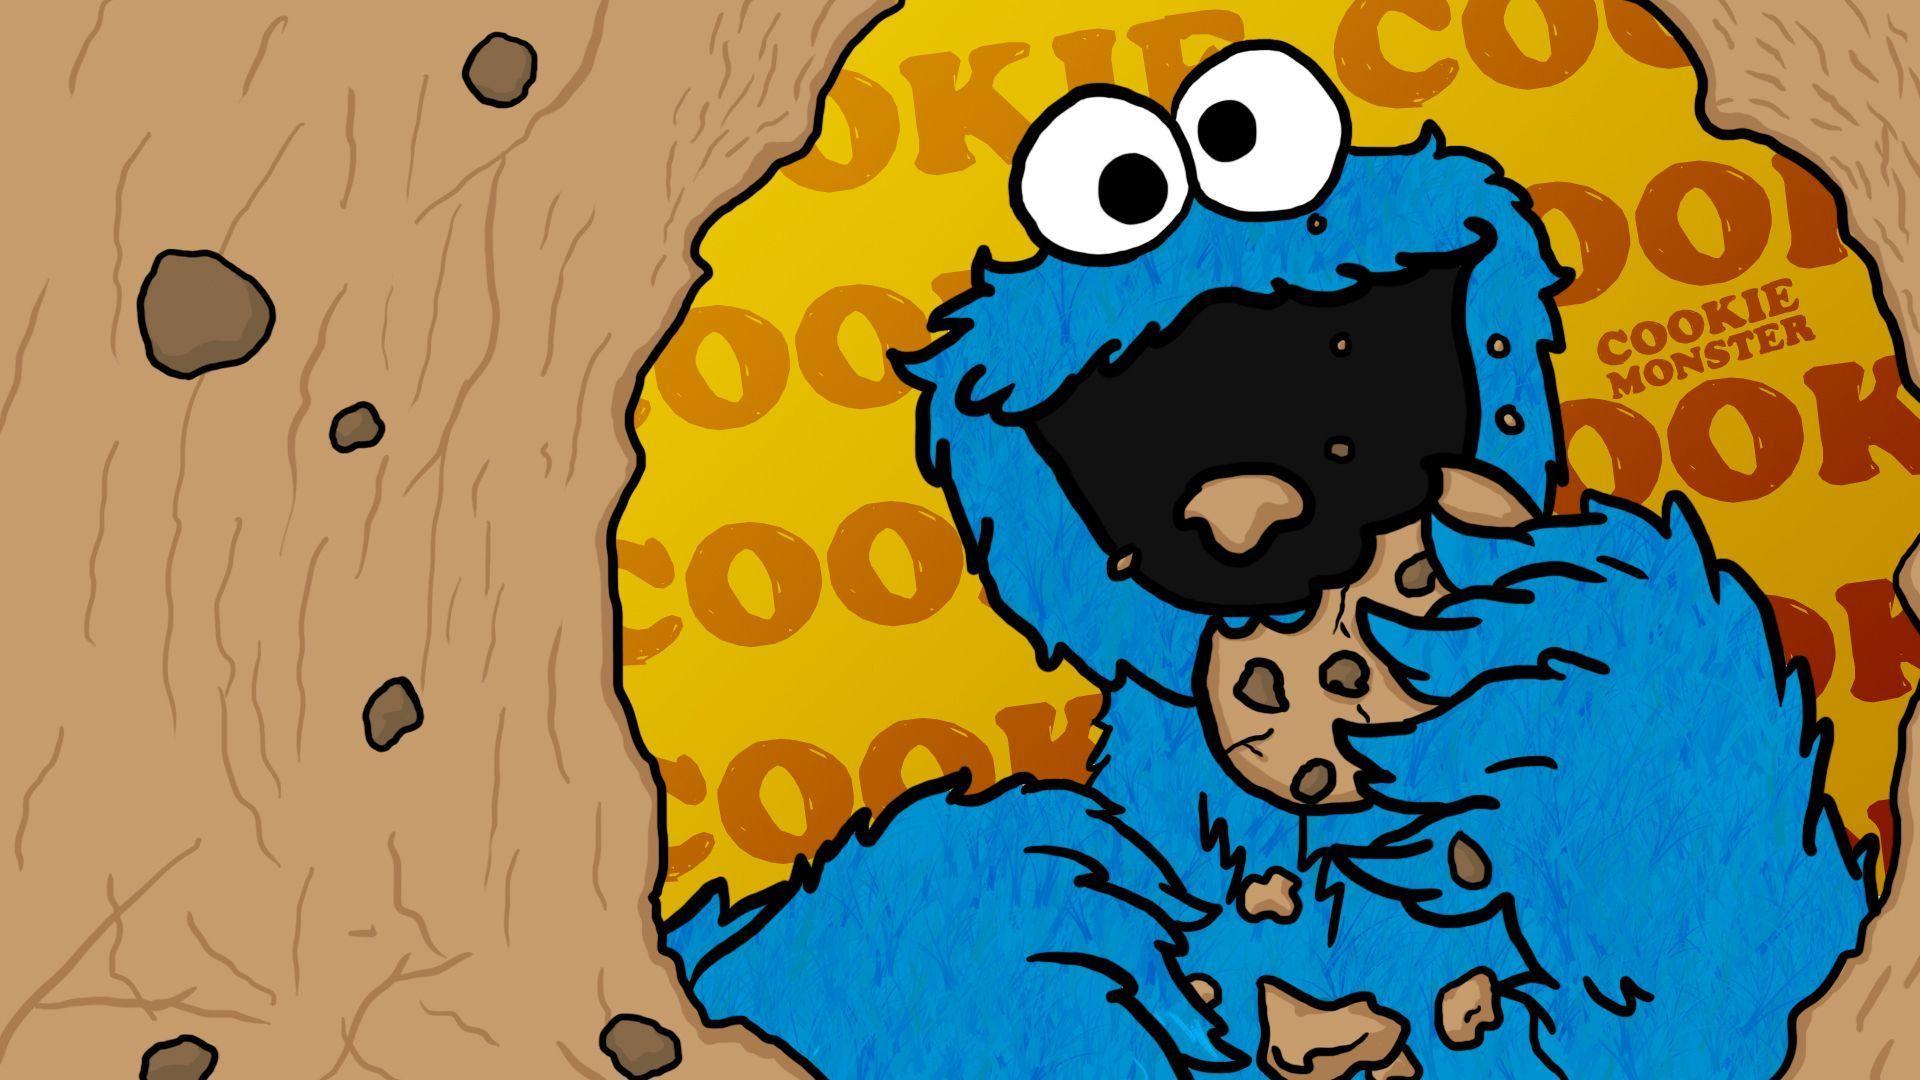 Cute Cookie Monster Wallpapers - Wallpaper Cave